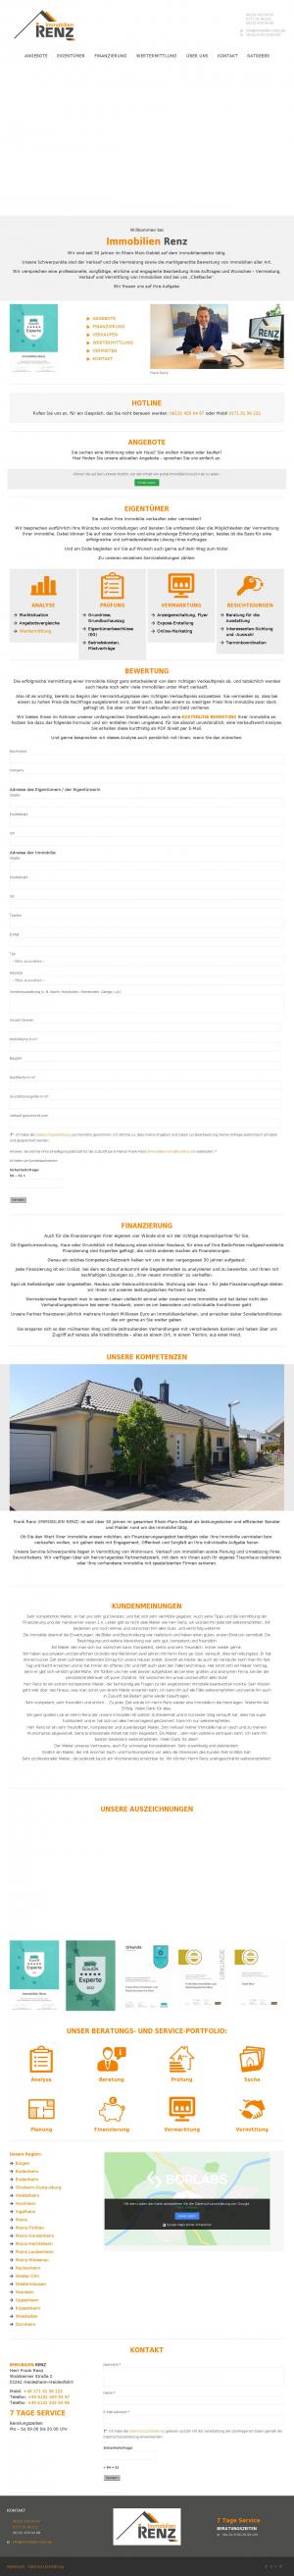 www.immobilien-renz.de